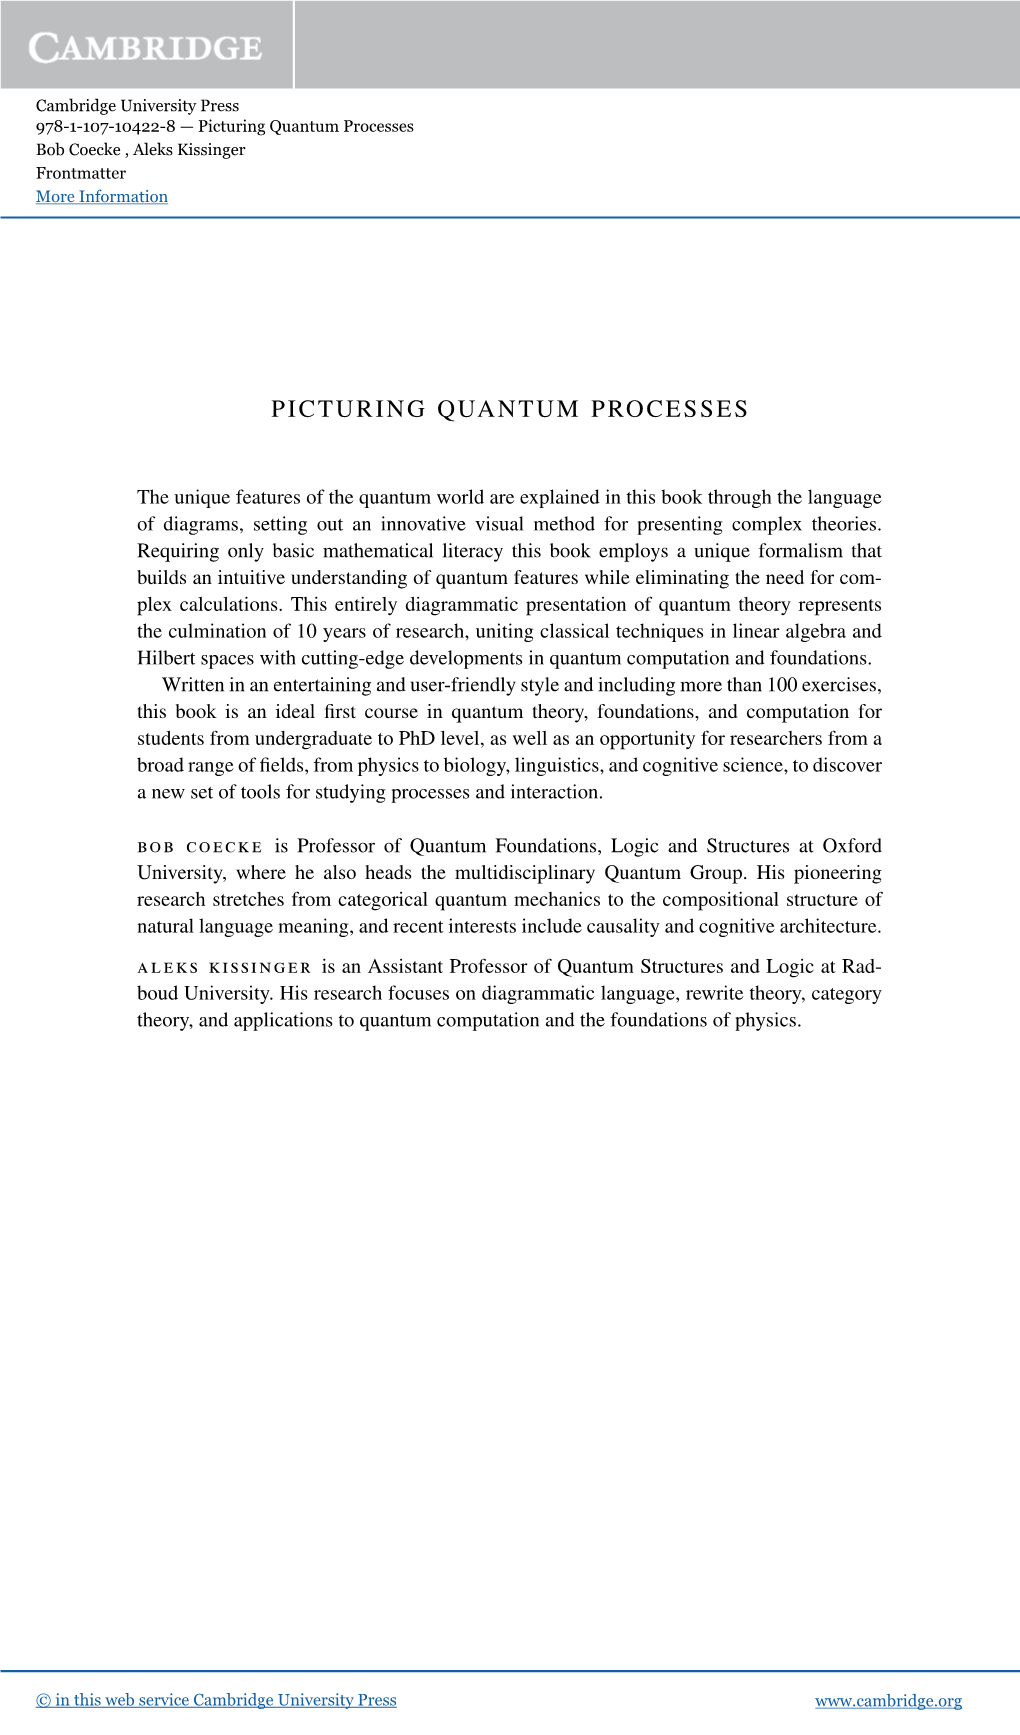 Picturing Quantum Processes Bob Coecke , Aleks Kissinger Frontmatter More Information